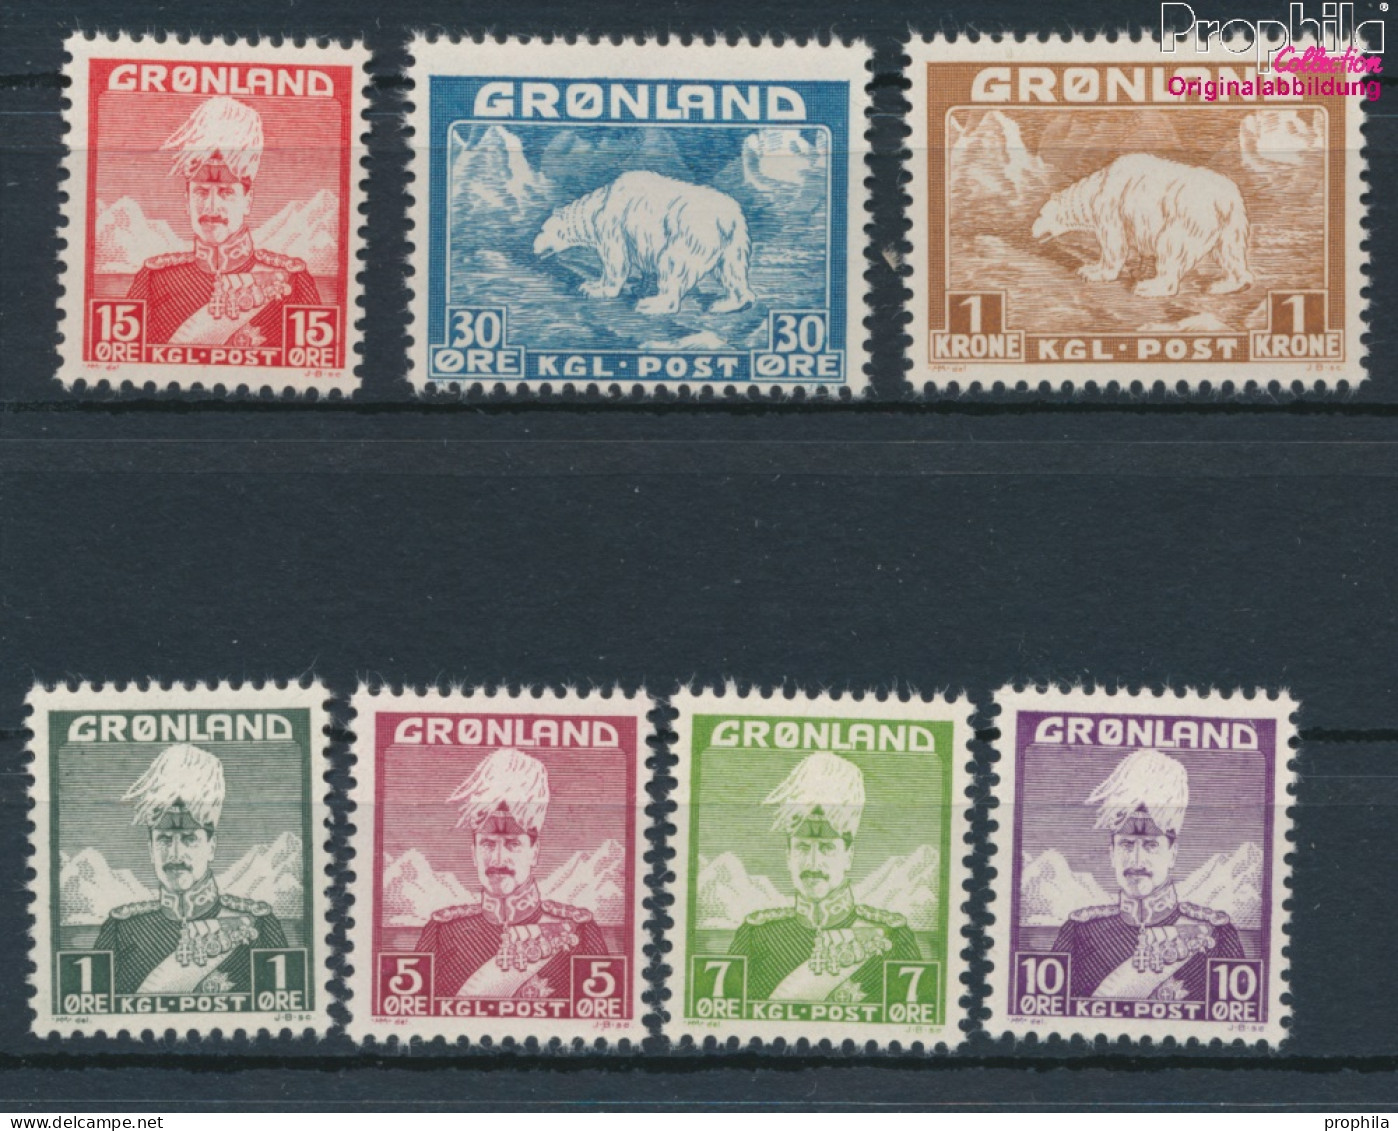 Dänemark - Grönland Postfrisch Christian X. 1938 König Christian X.  (10174225 - Oblitérés